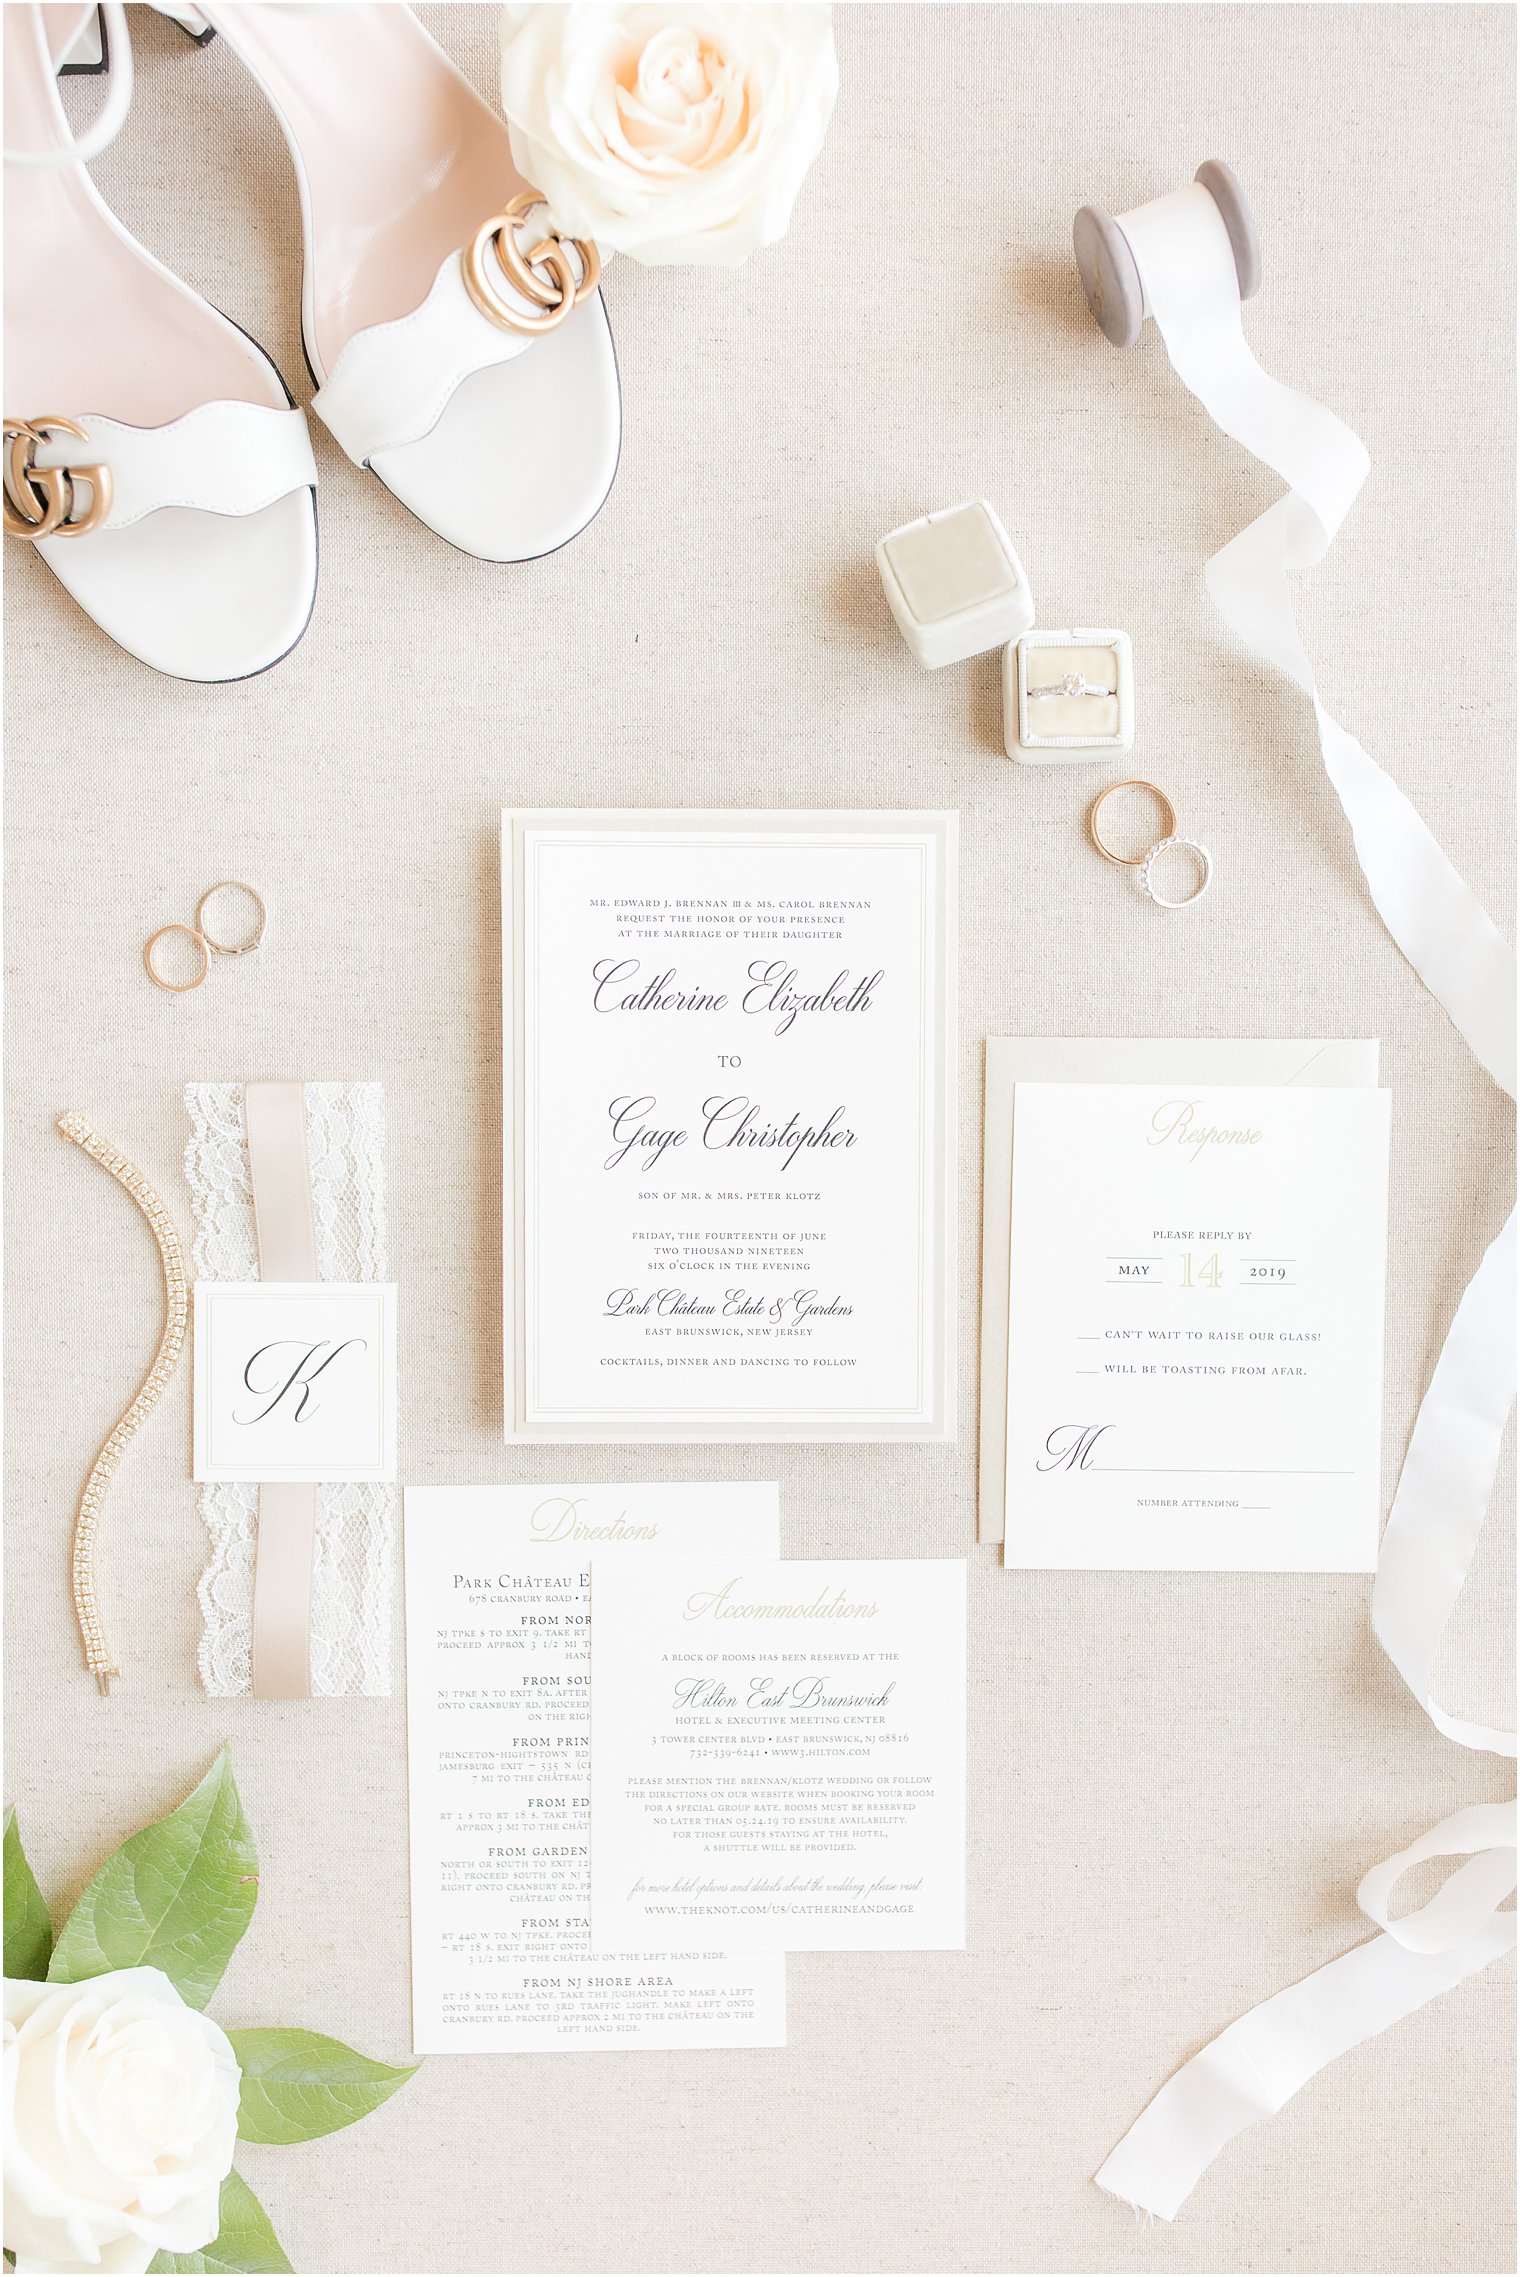 Timeless wedding invitation by Art Paper Scissors